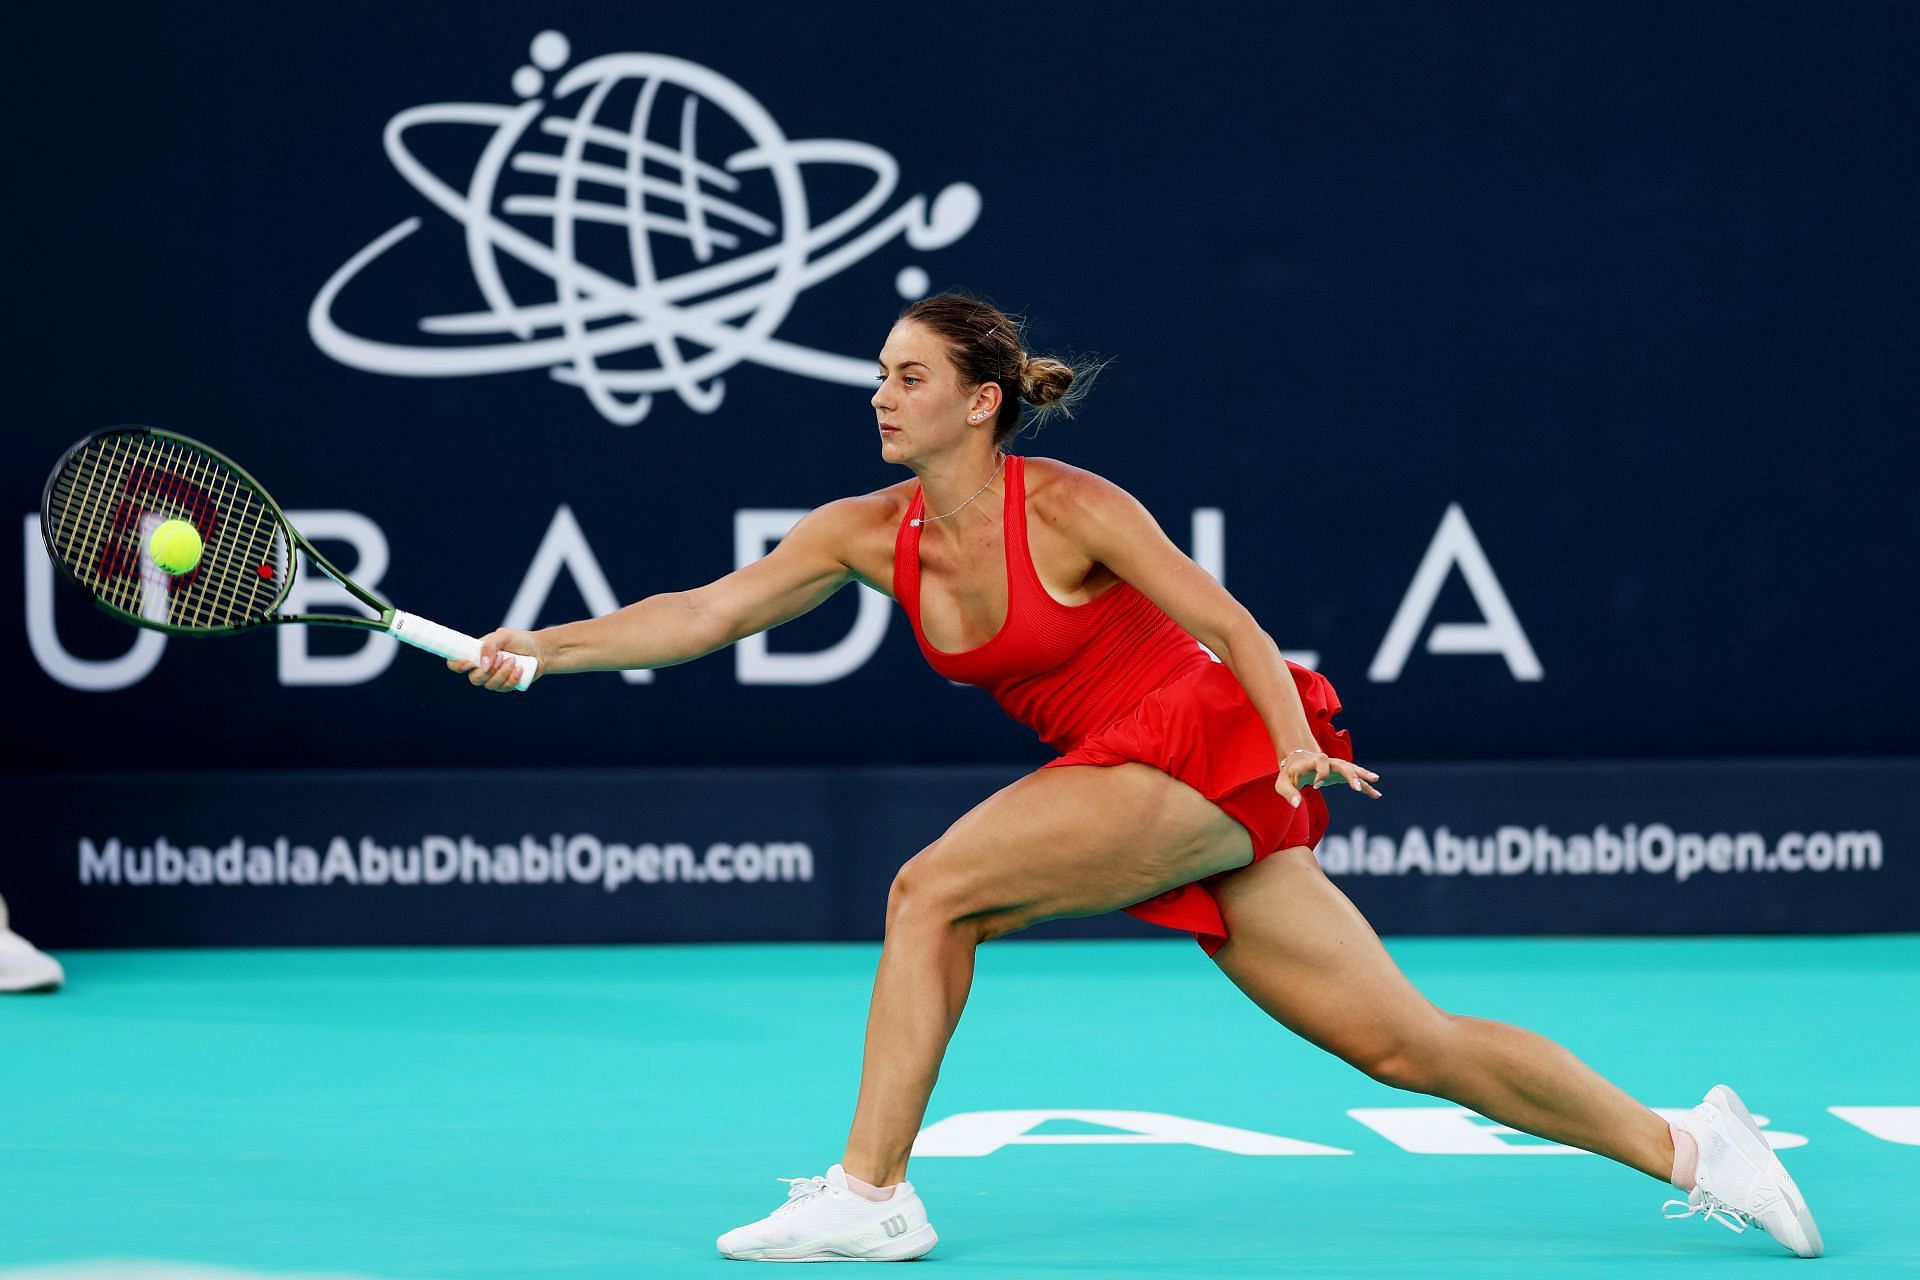 Marta Kostyuk in action at the Mubadala Abu Dhabi Open